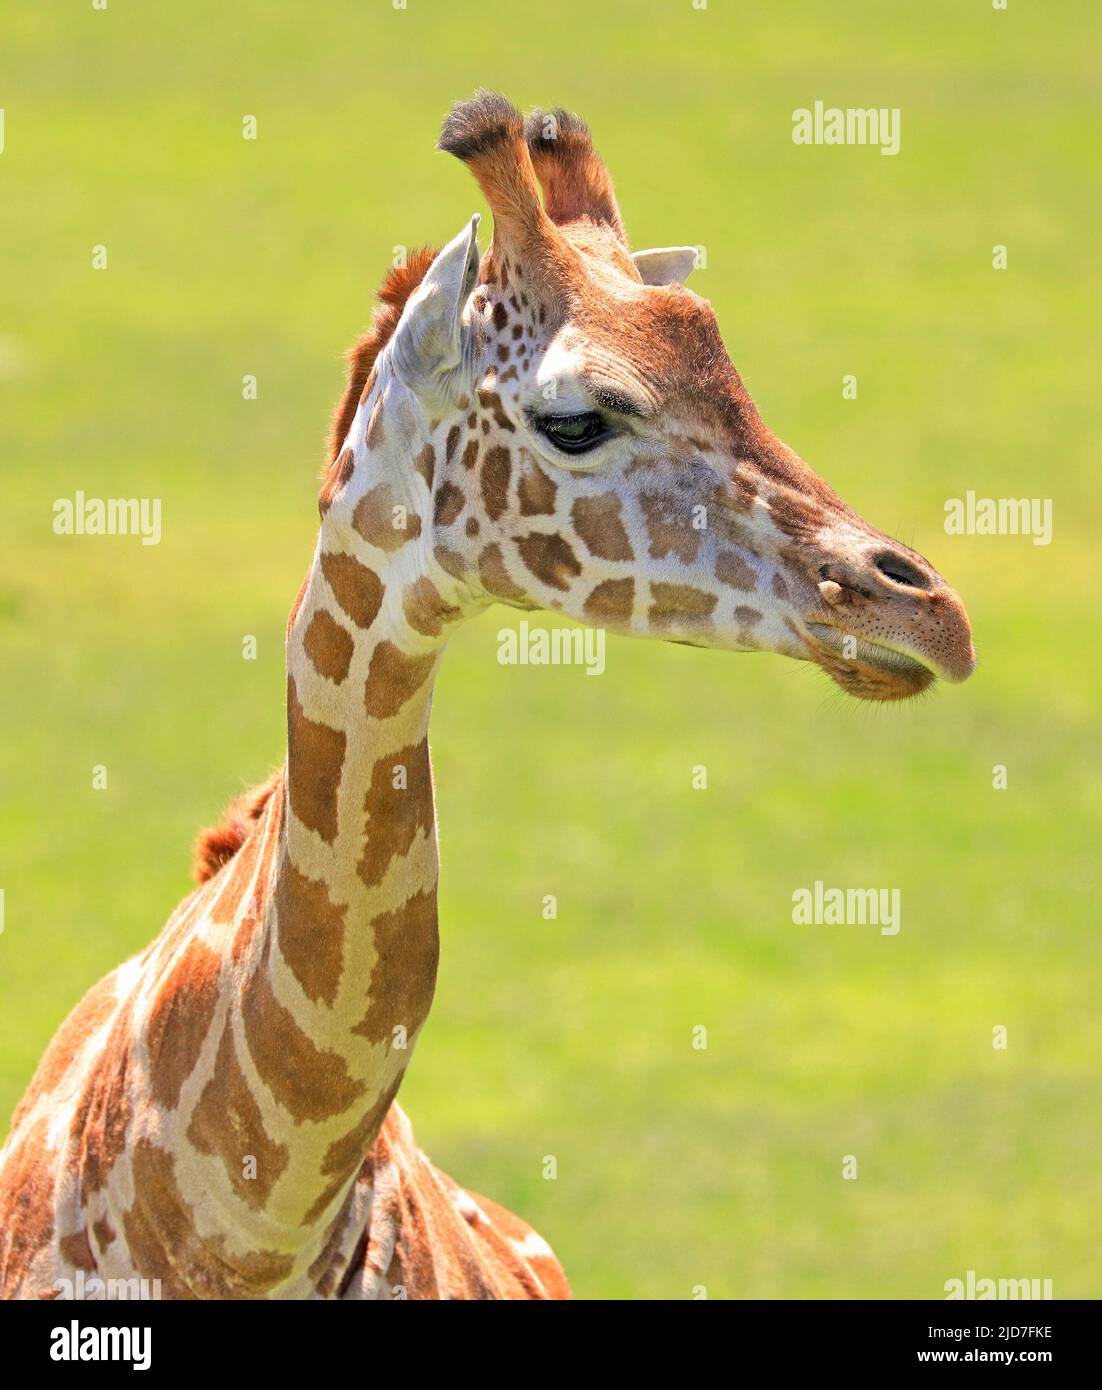 Giraffe head and neck closeup portrait Stock Photo